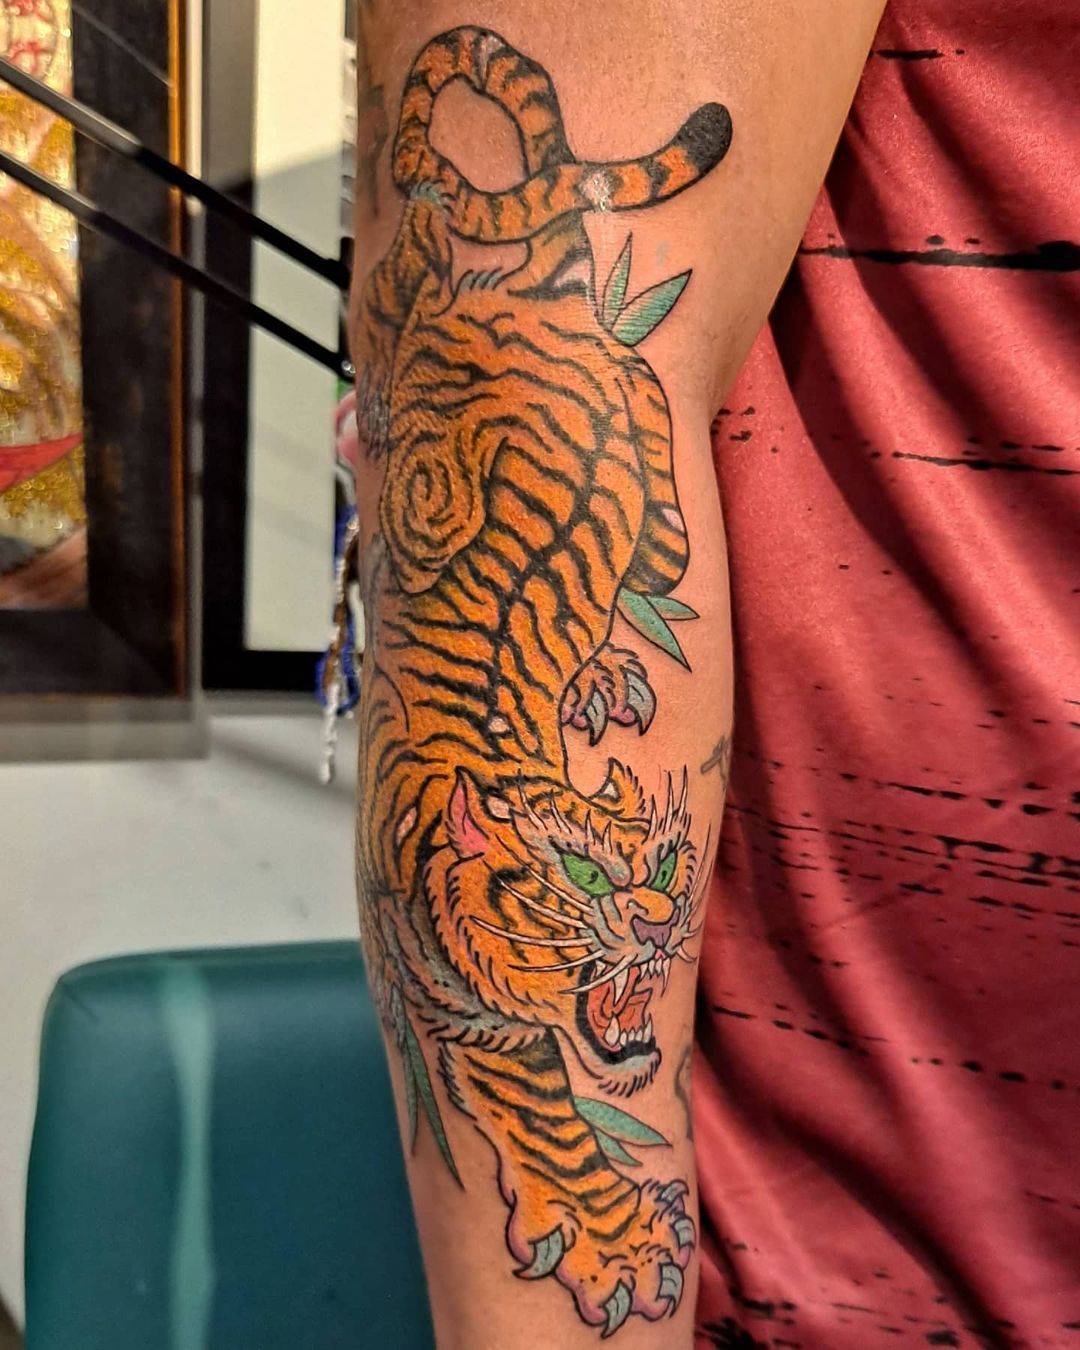 Tiger Tattoo Done  Realistic Tiger Tattoo  Forearm Tattoo  youtubeshorts  Marvels Ink Tattoos  YouTube